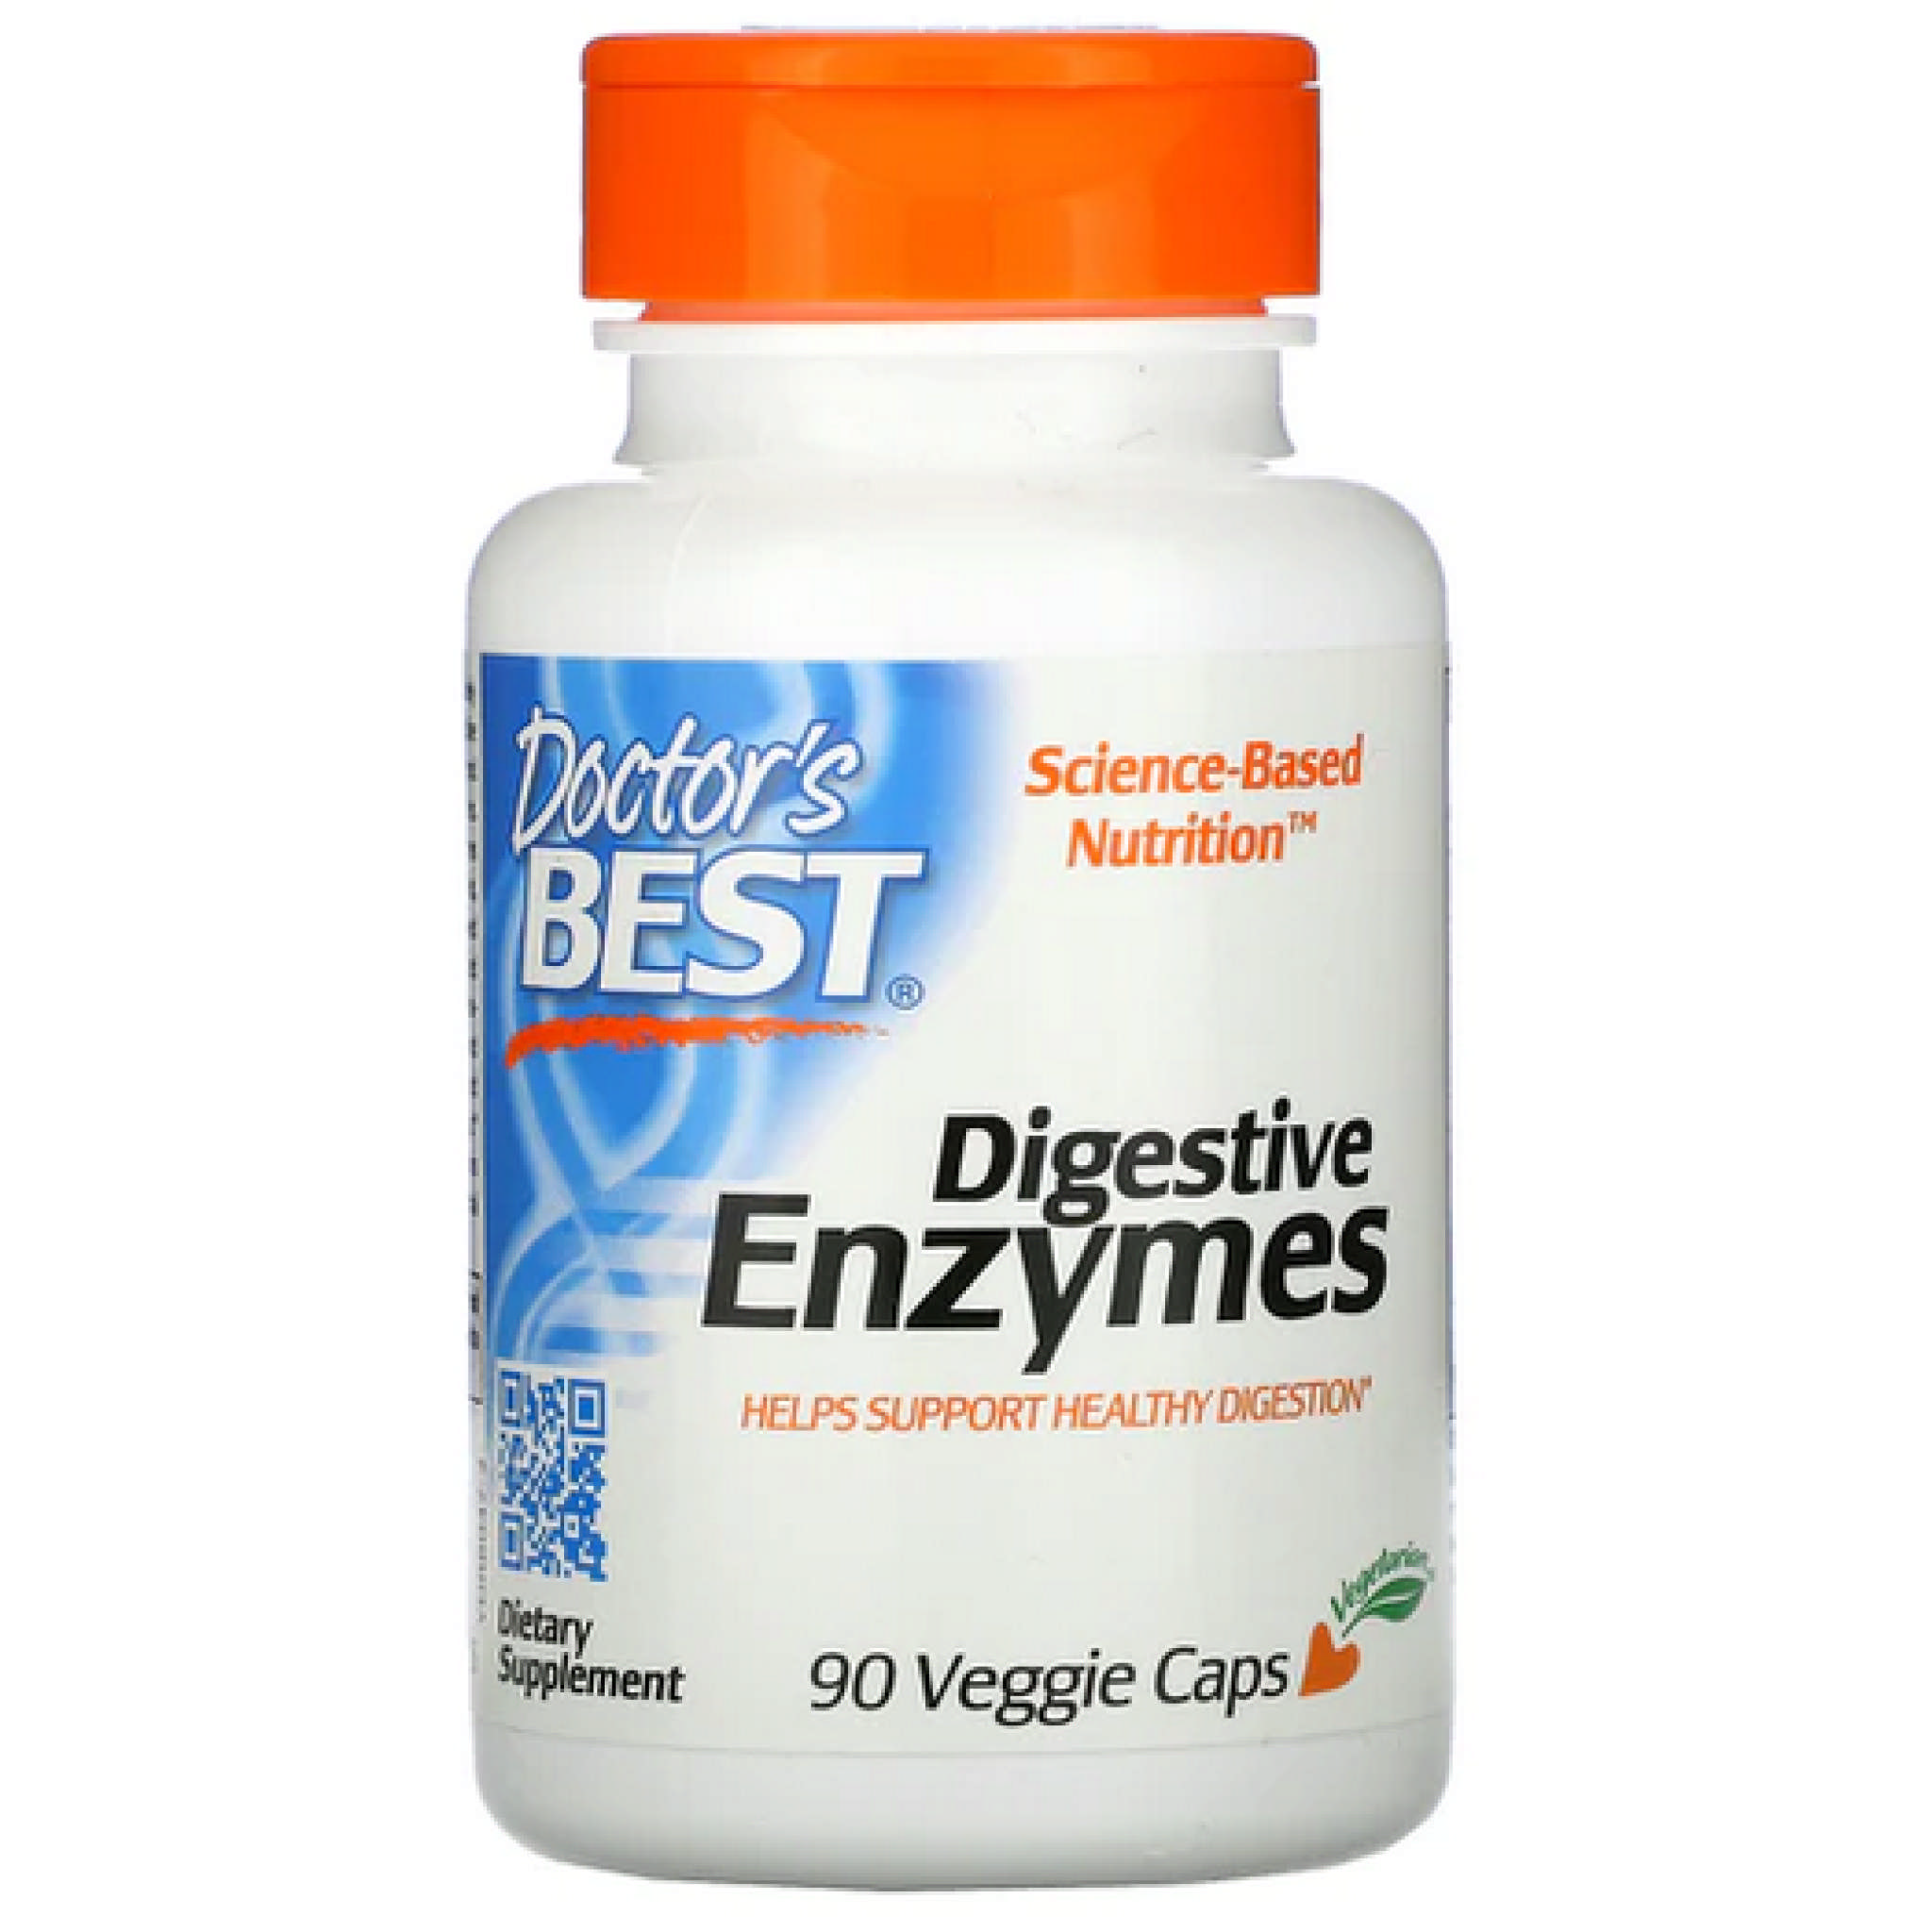 Doctors Best - Digestive Enzymes Best